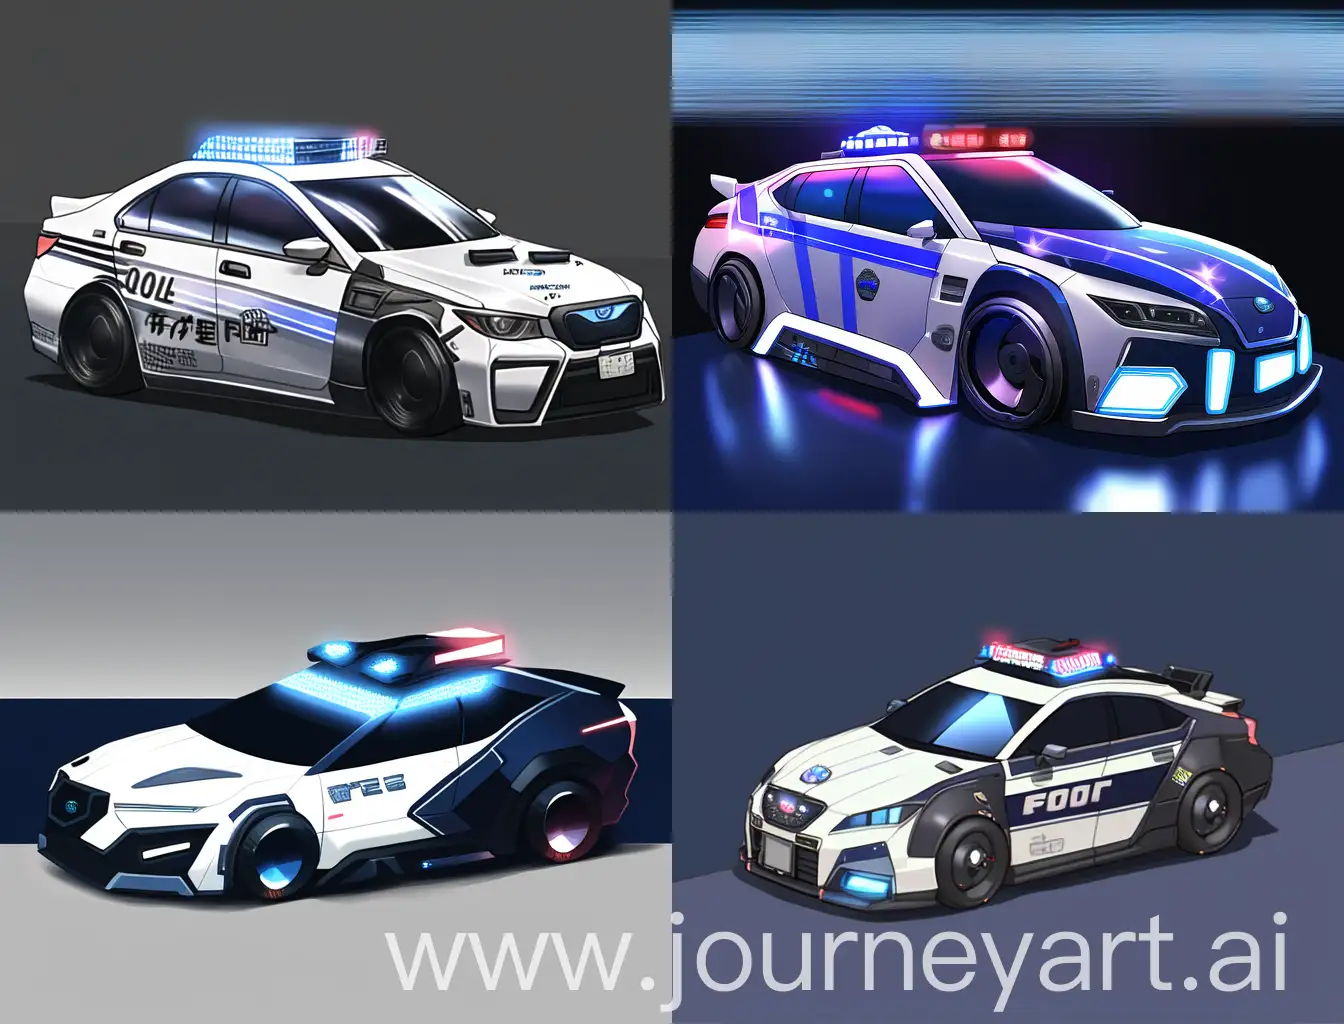 imagine a elegant, minimalist and modern police car skin